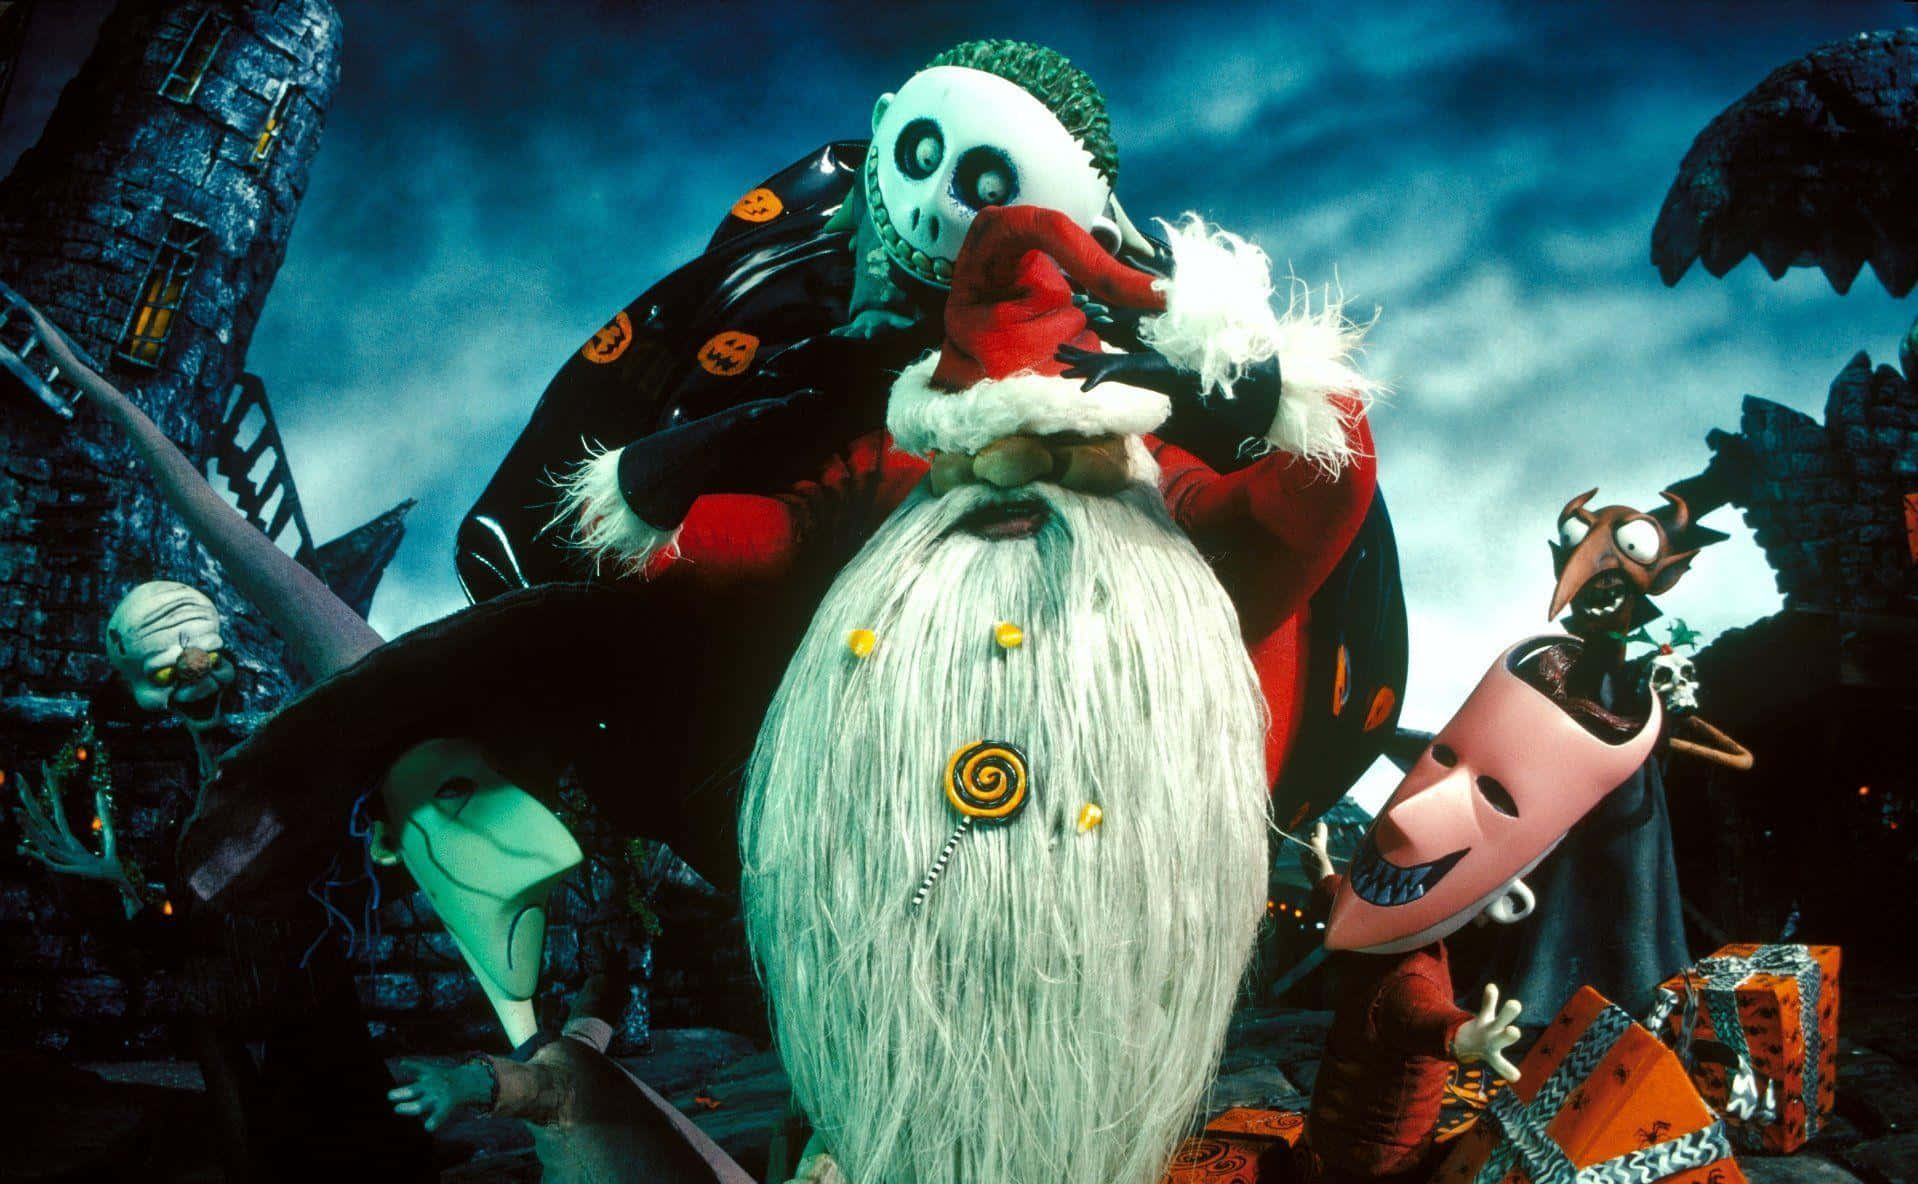 Watch Halloween Town's Pumpkin King, Jack Skellington, from Tim Burton's "The Nightmare Before Christmas"